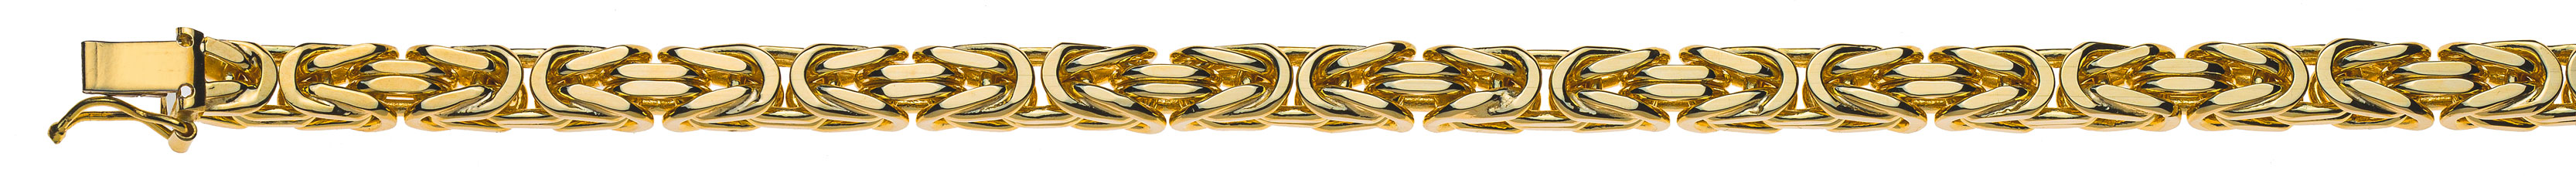 AURONOS Prestige Necklace yellow gold 18K king chain 55cm 5mm